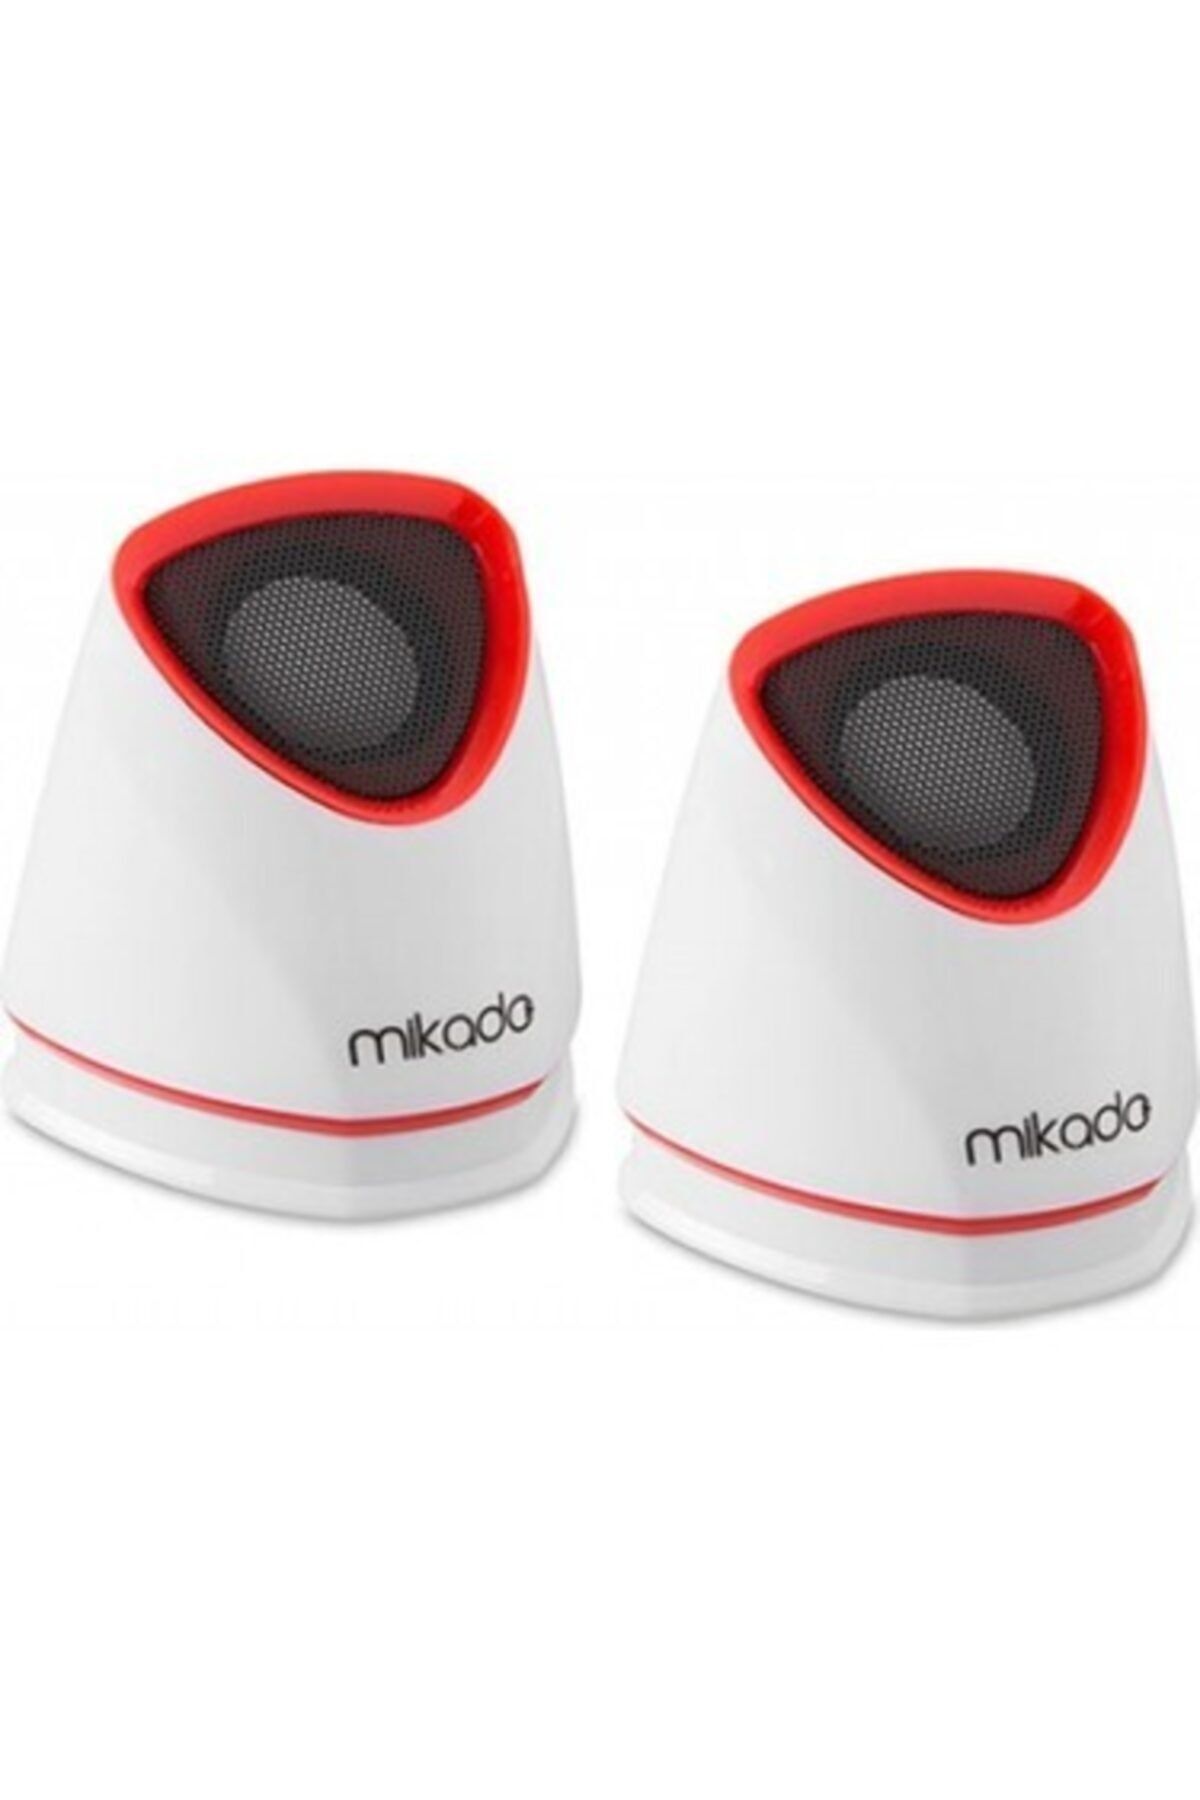 Mikado Md-158 2.0 Beyaz/kırmızı Usb Speaker